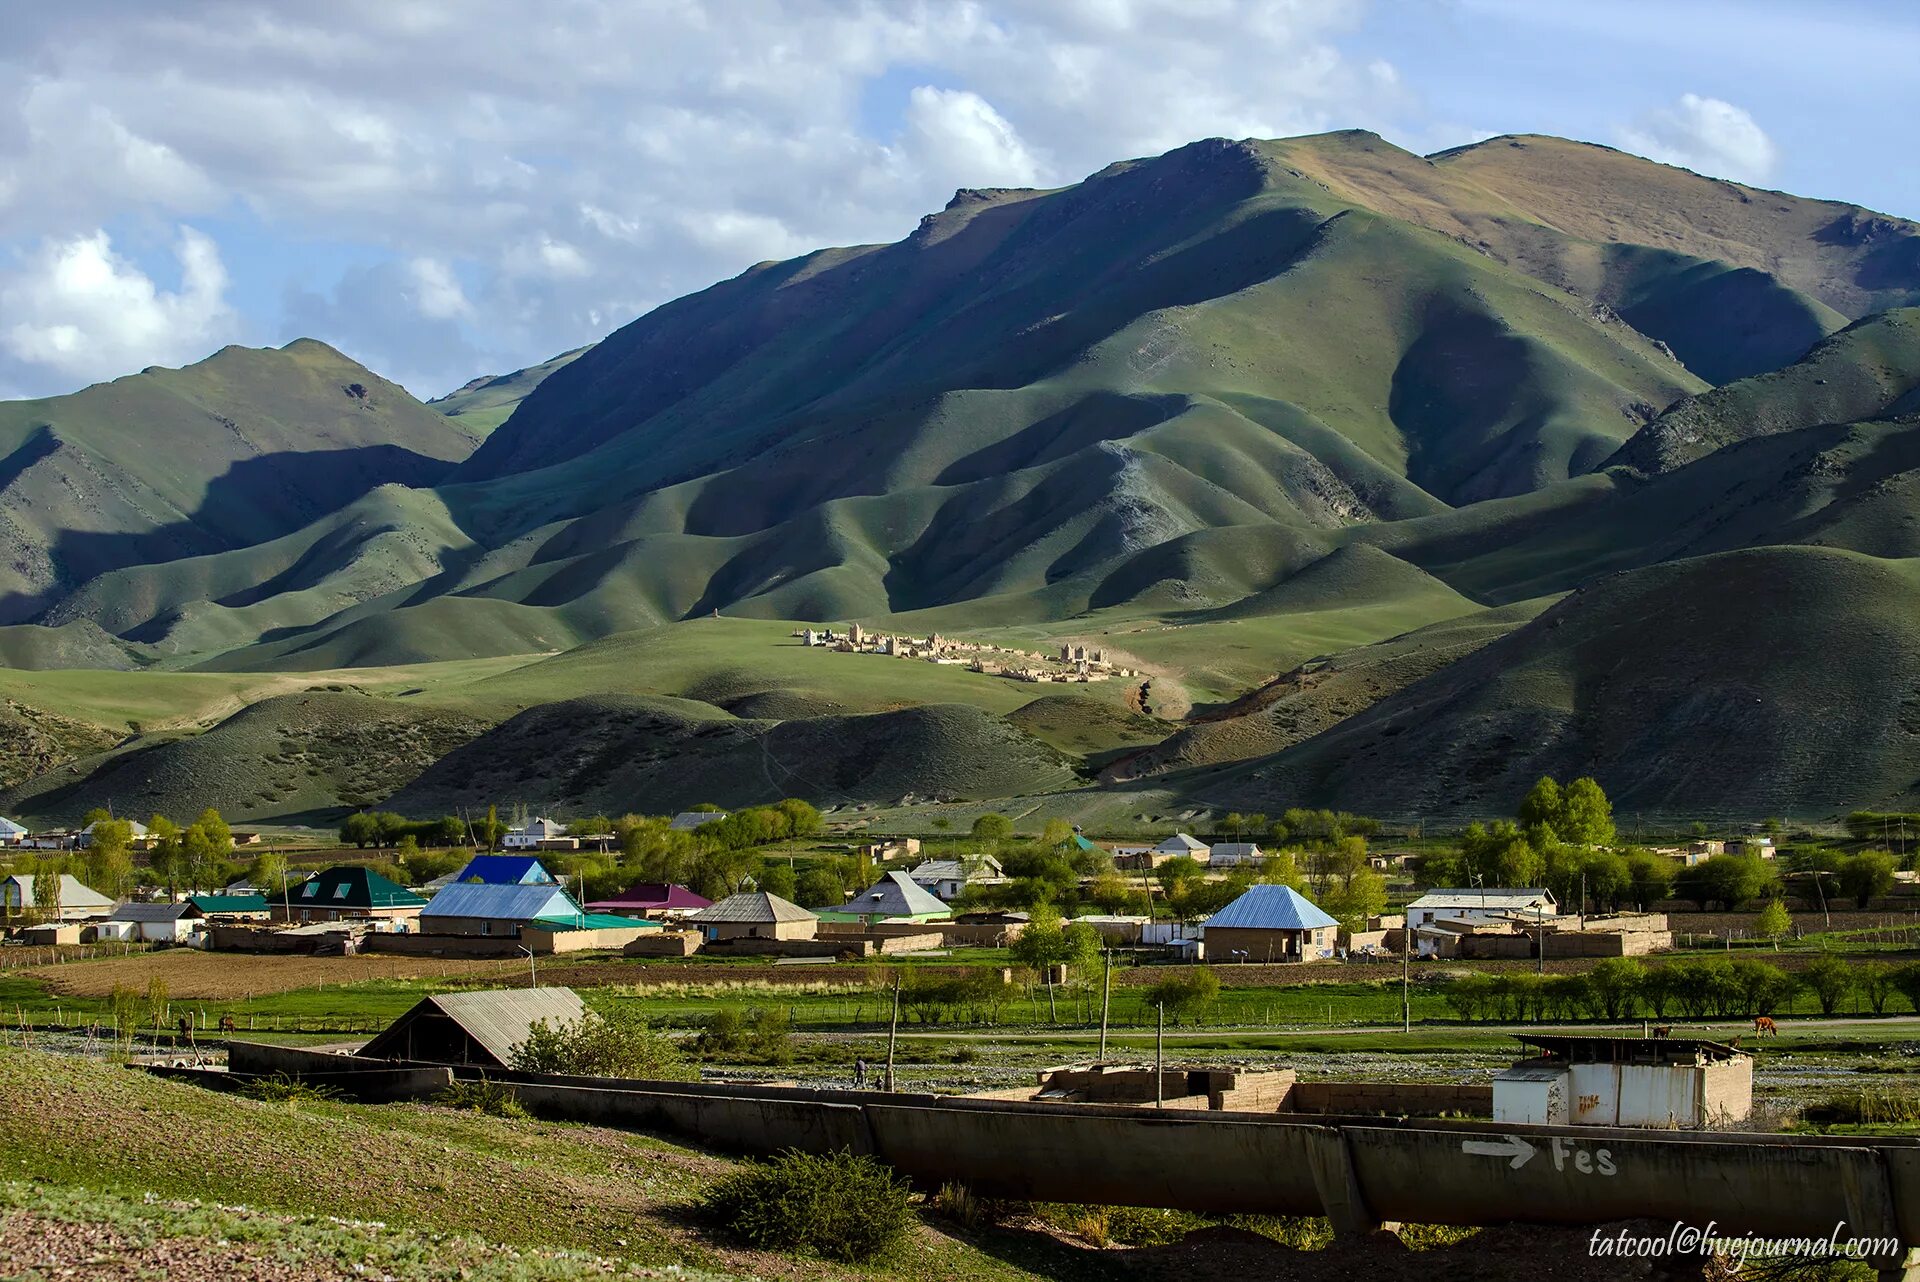 Поселки киргизии. Село Кочкорка Киргизия. Аул в Киргизии. Село Шекер Киргизия. Высокогорное село в Киргизии.